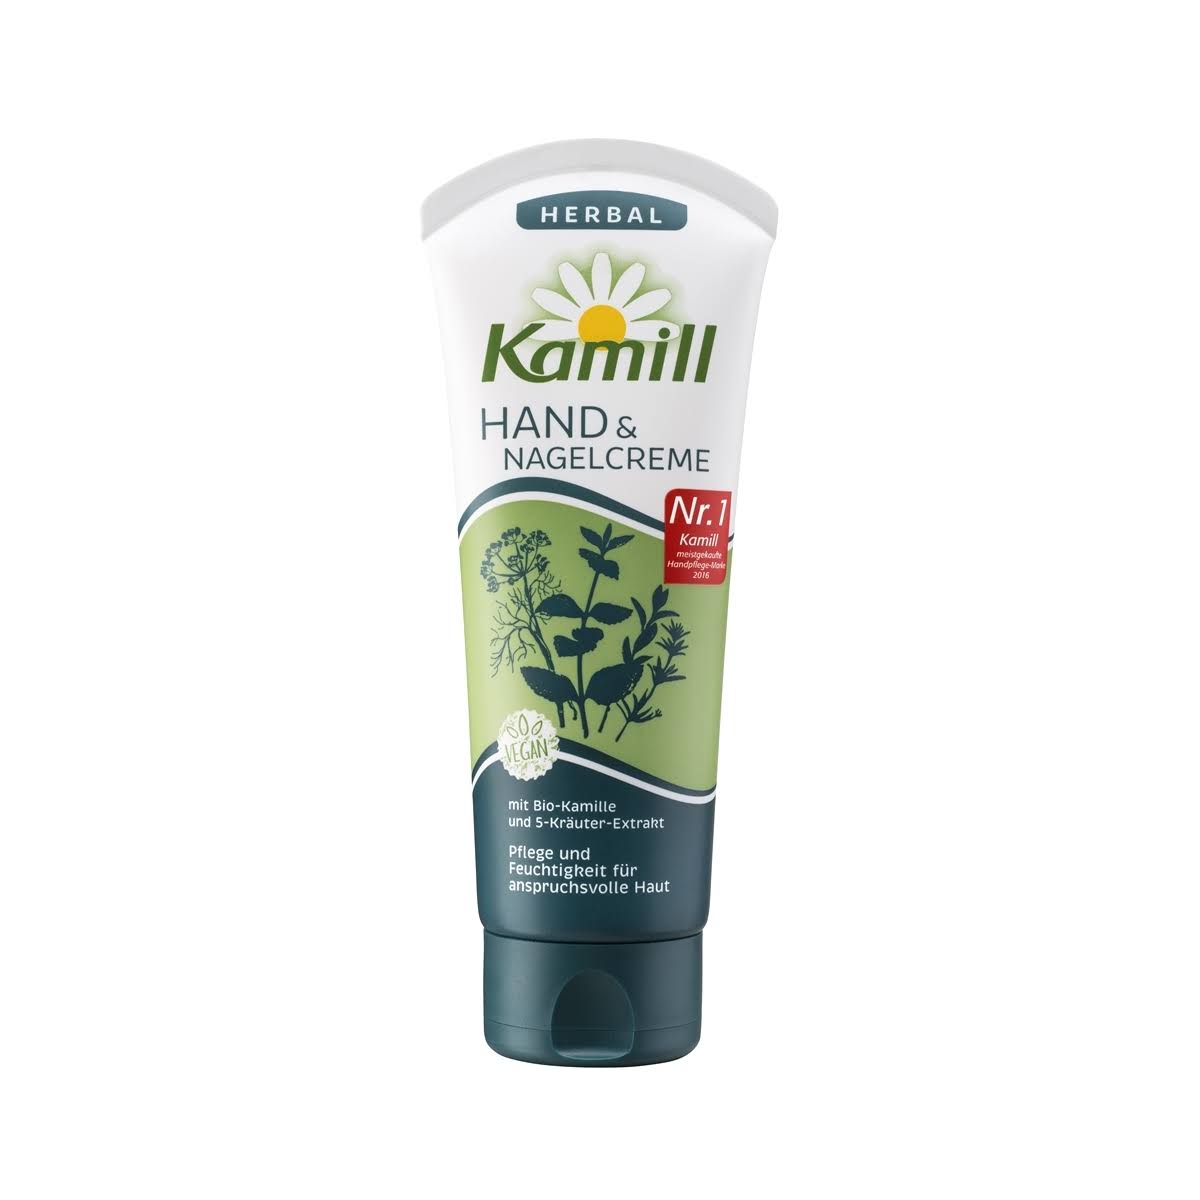 Kamill Herbal Hand & Nail Cream Travel Size 30ml 1 fl oz